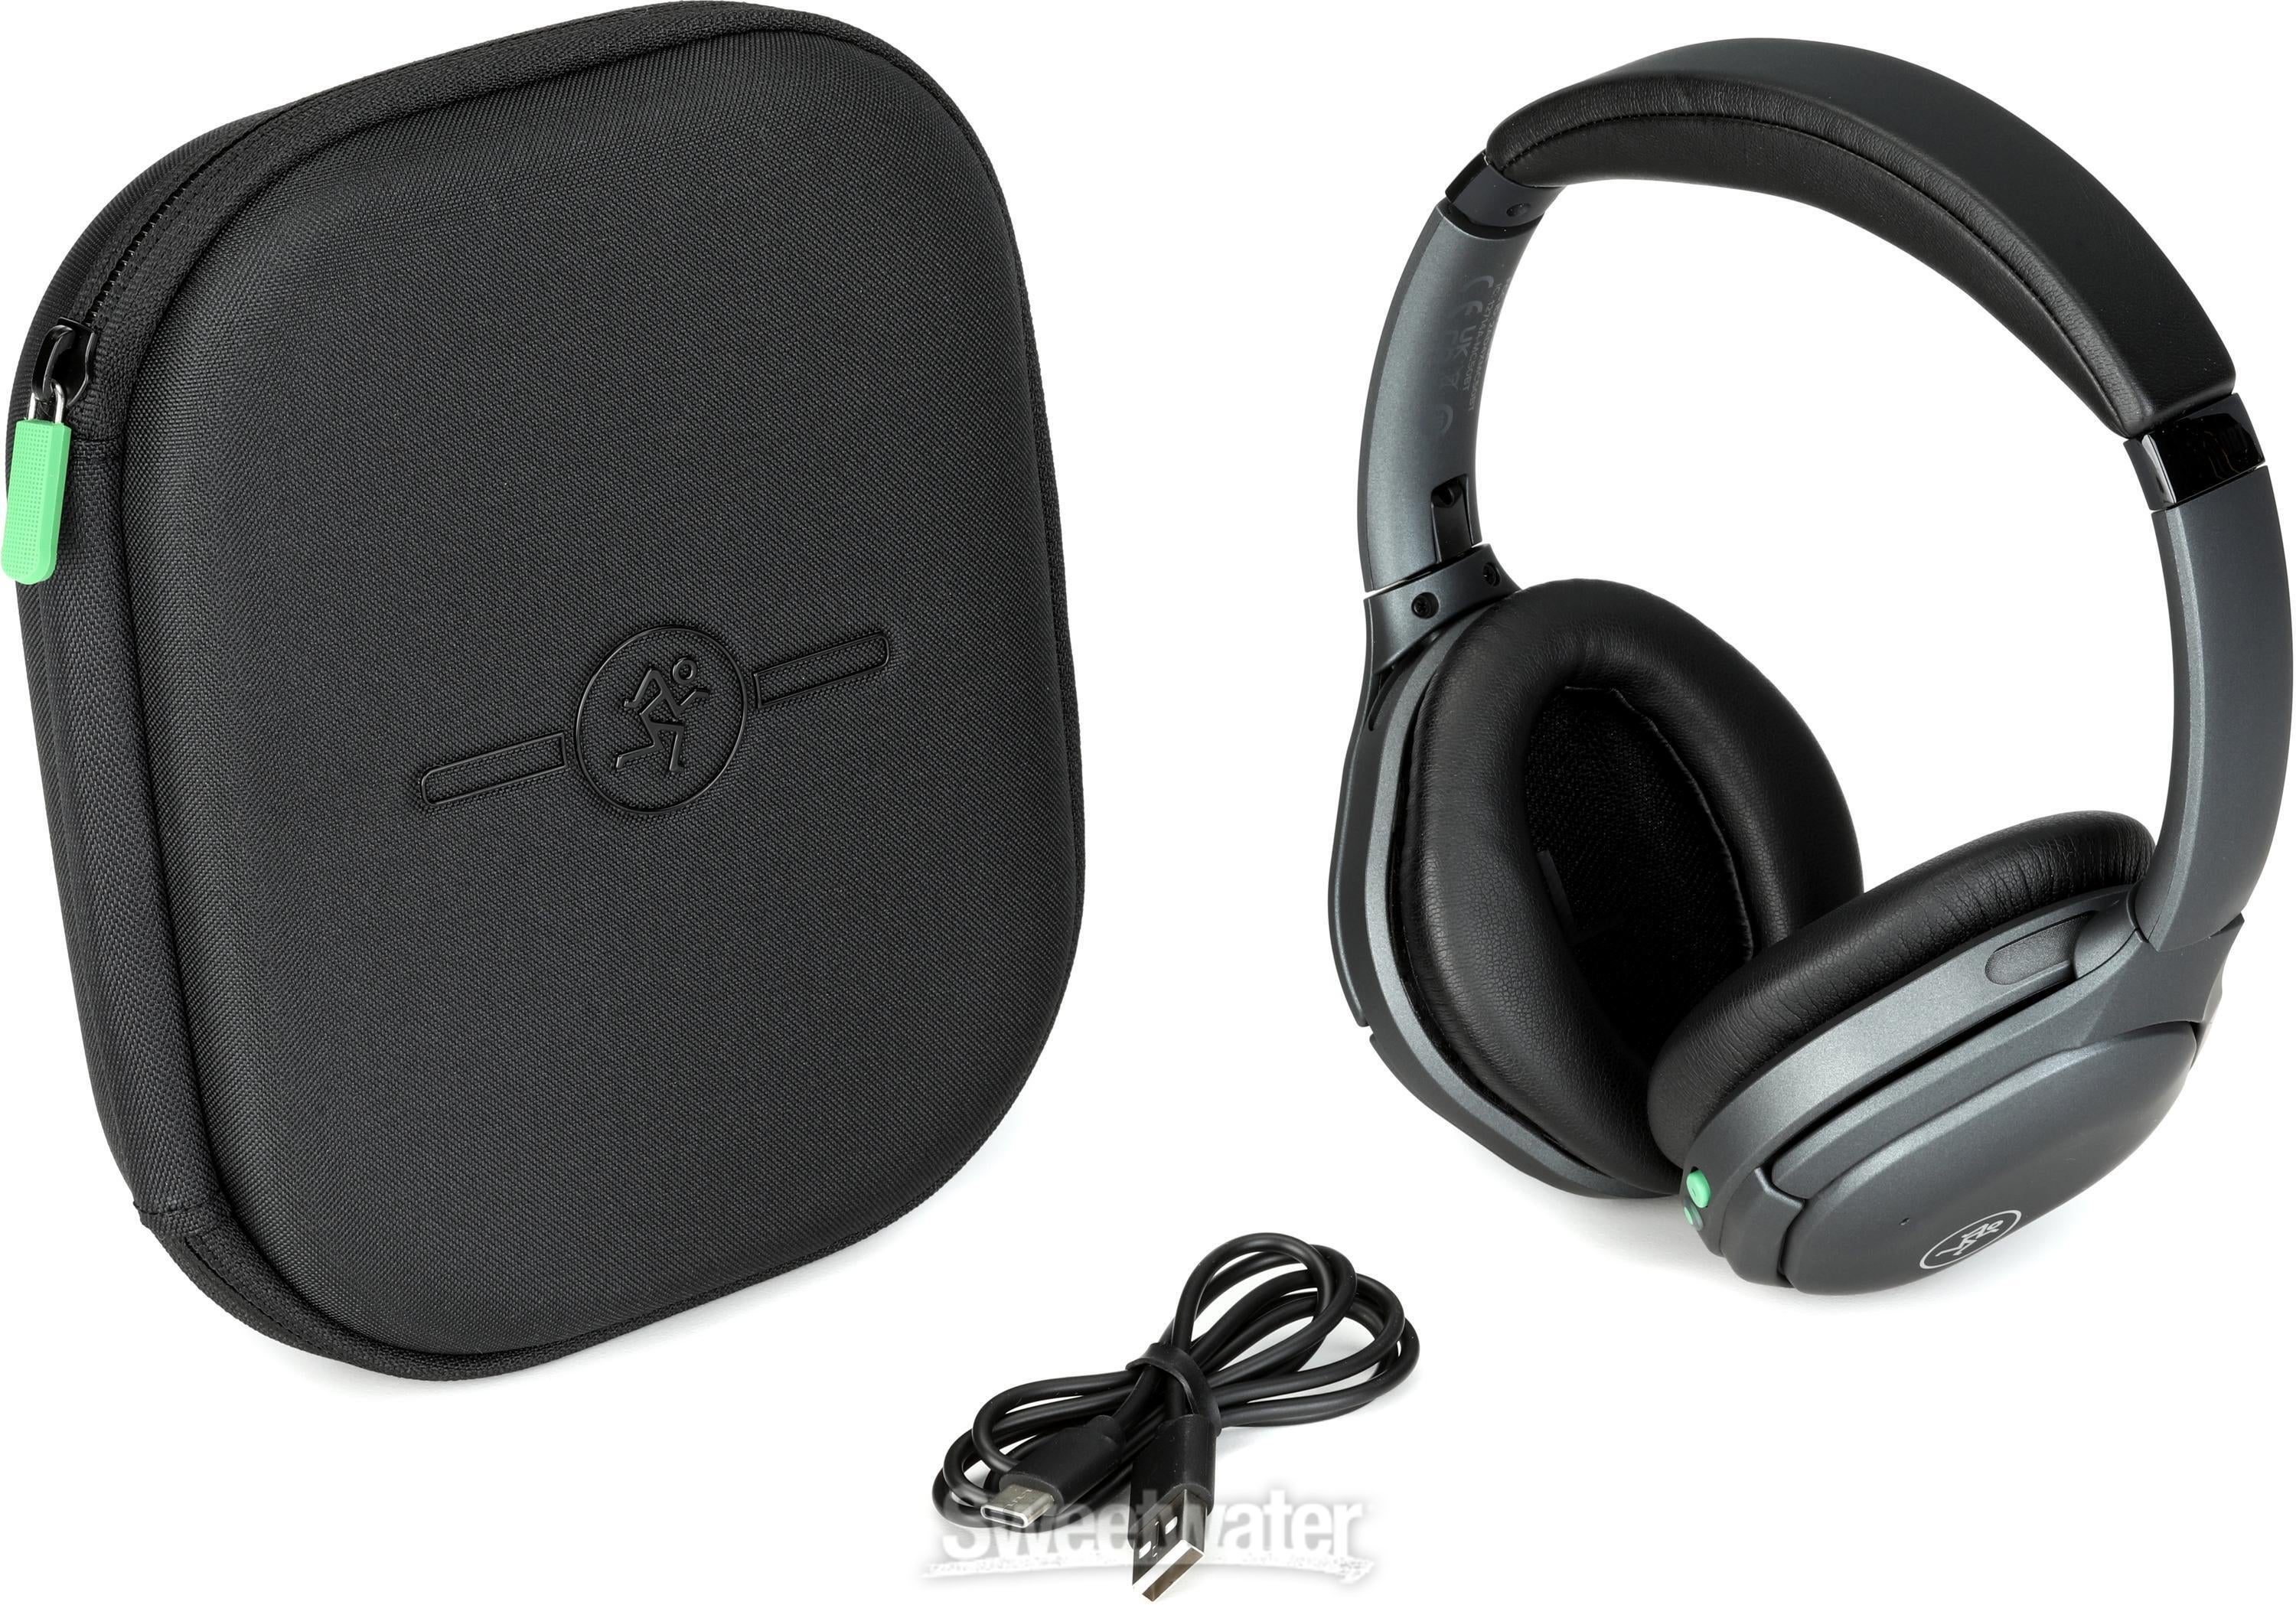 Mackie MC-50BT Wireless Noise-canceling Headphones with Bluetooth